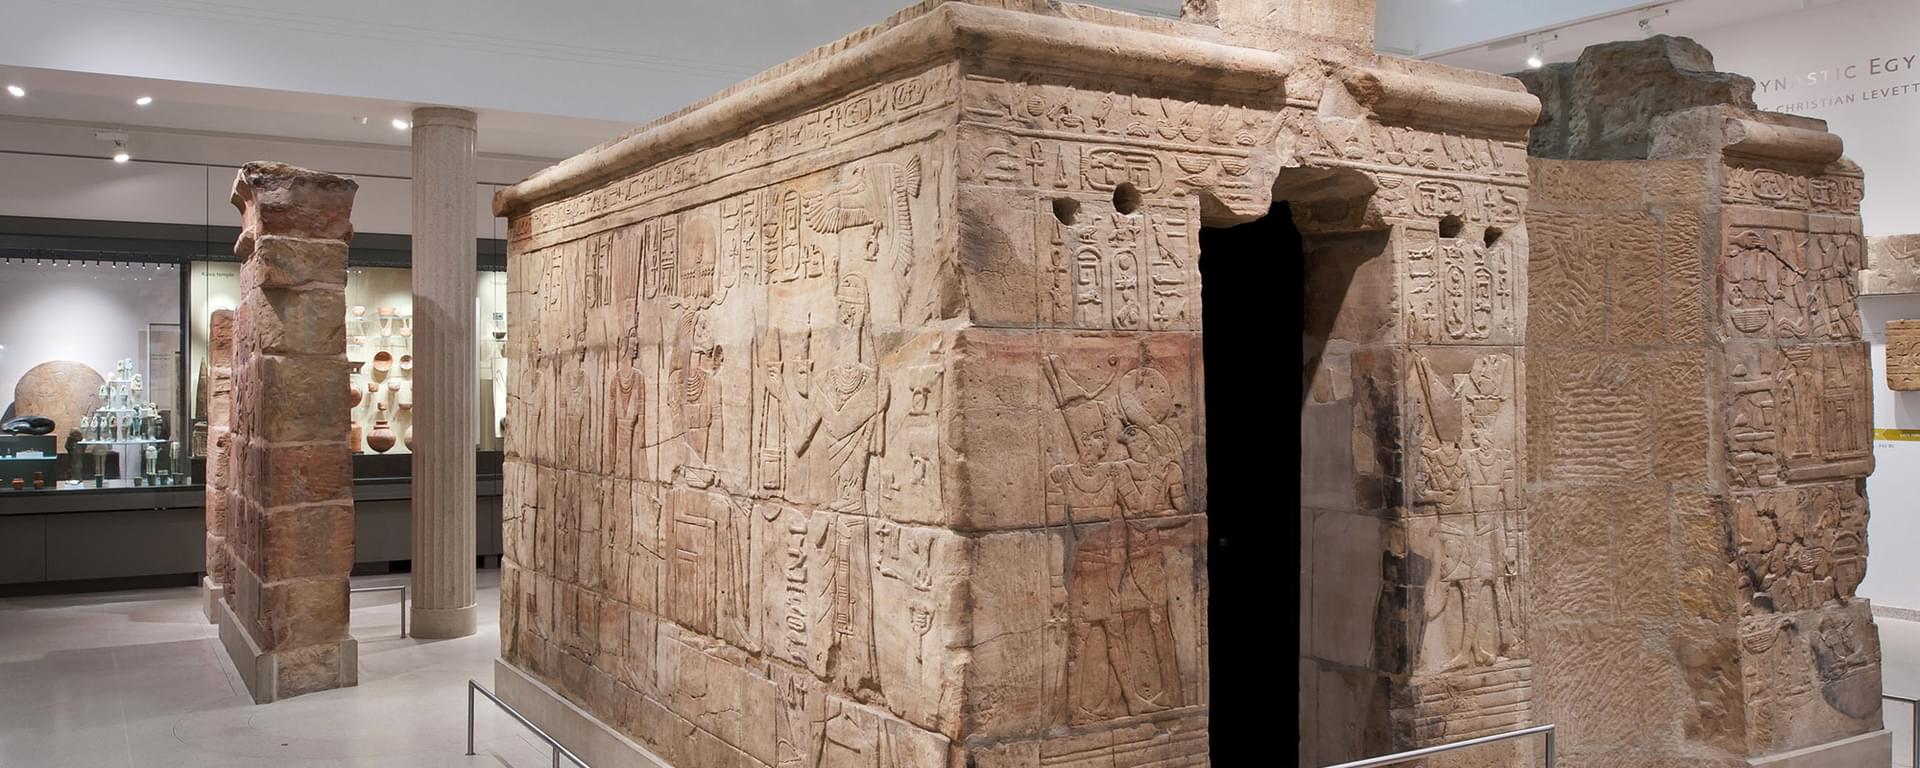 The Ashmolean Museum - Egypt Galleries